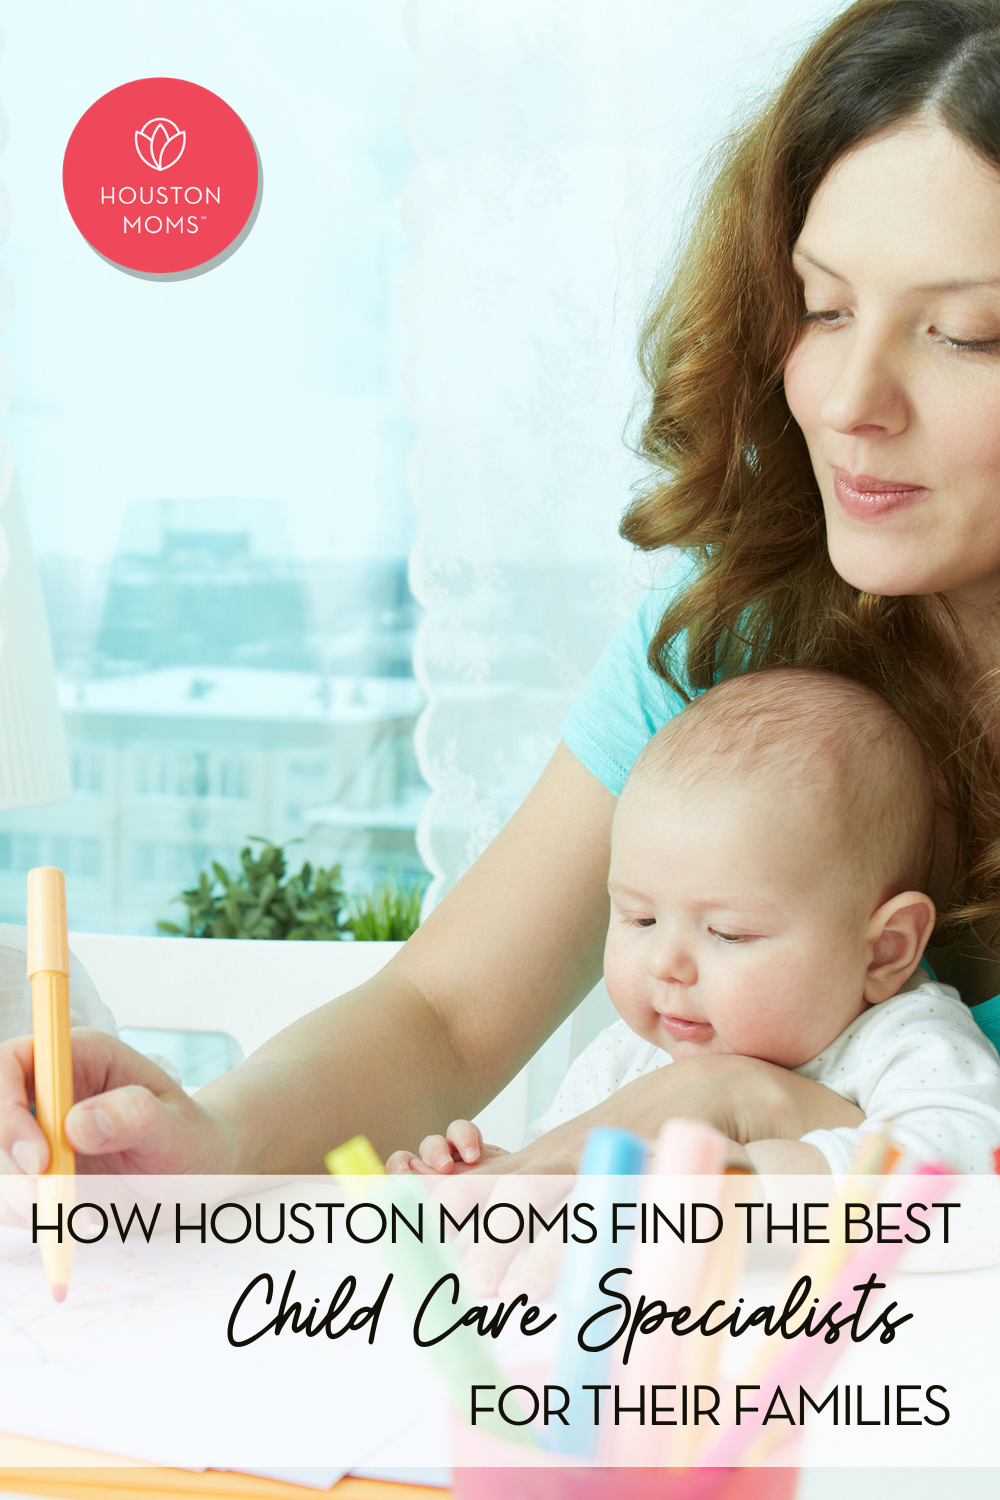 Houston Moms "How Houston Moms Find the Best Child Care Specialists for their Families" #houstonmoms #houstonmomsblog #momsaroundhouston